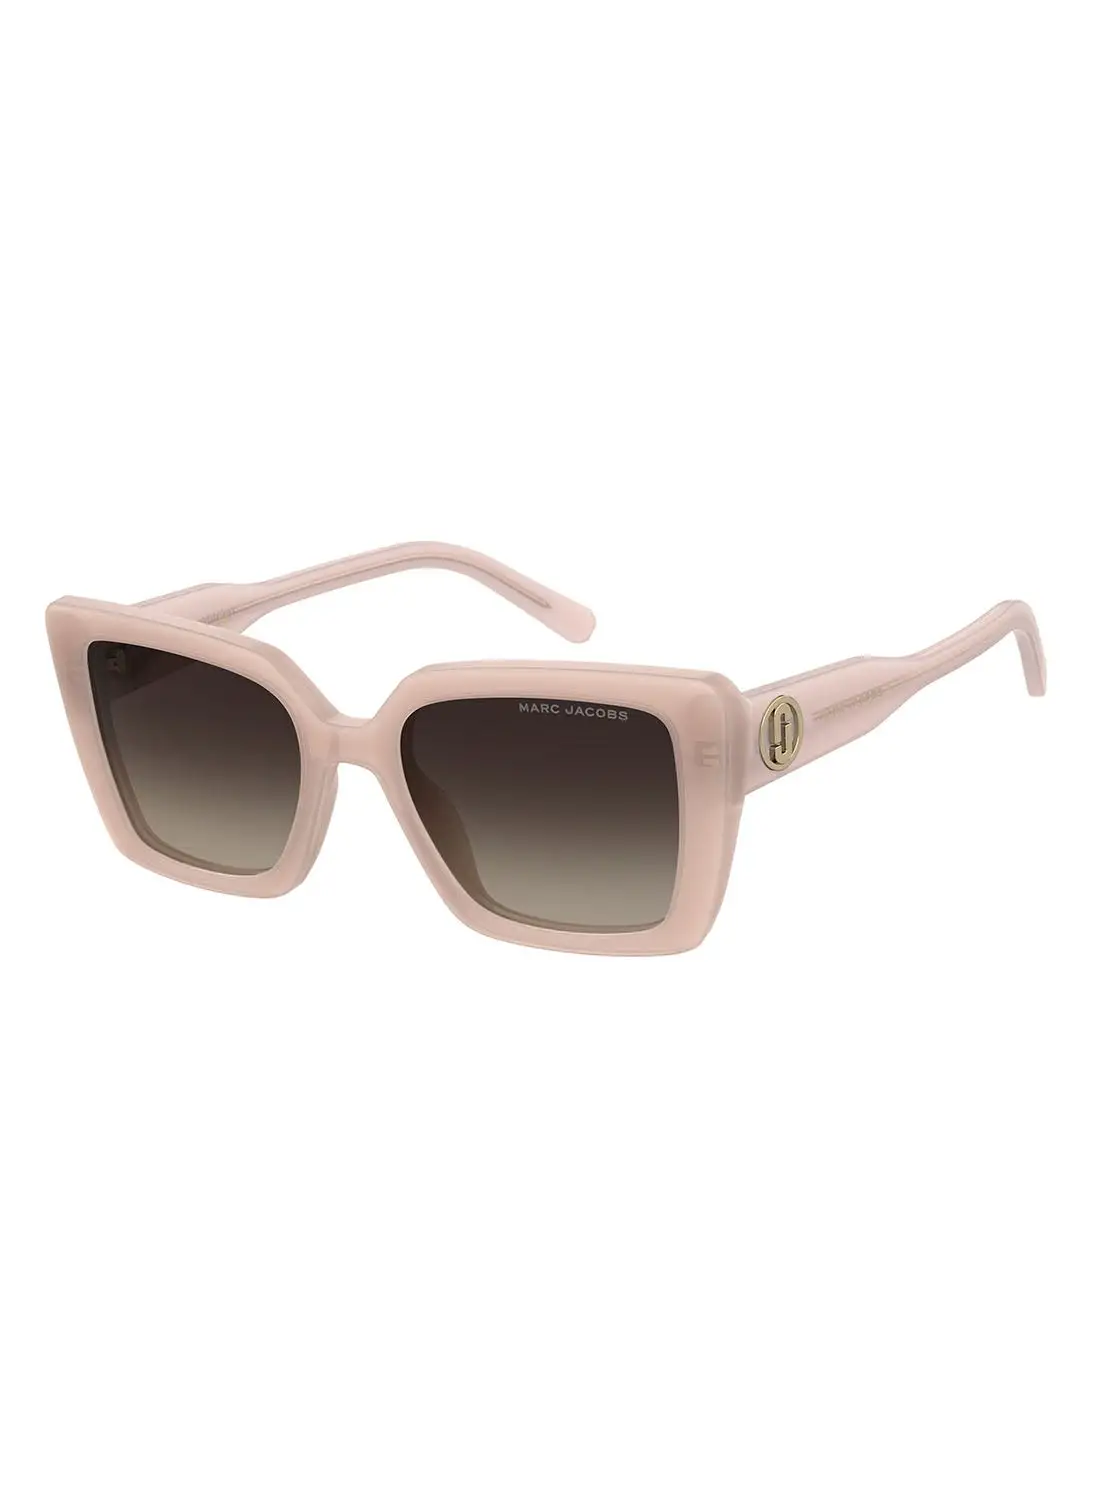 Marc Jacobs Women's UV Protection Rectangular Sunglasses - Marc 733/S Pink Millimeter - Lens Size: 52 Mm